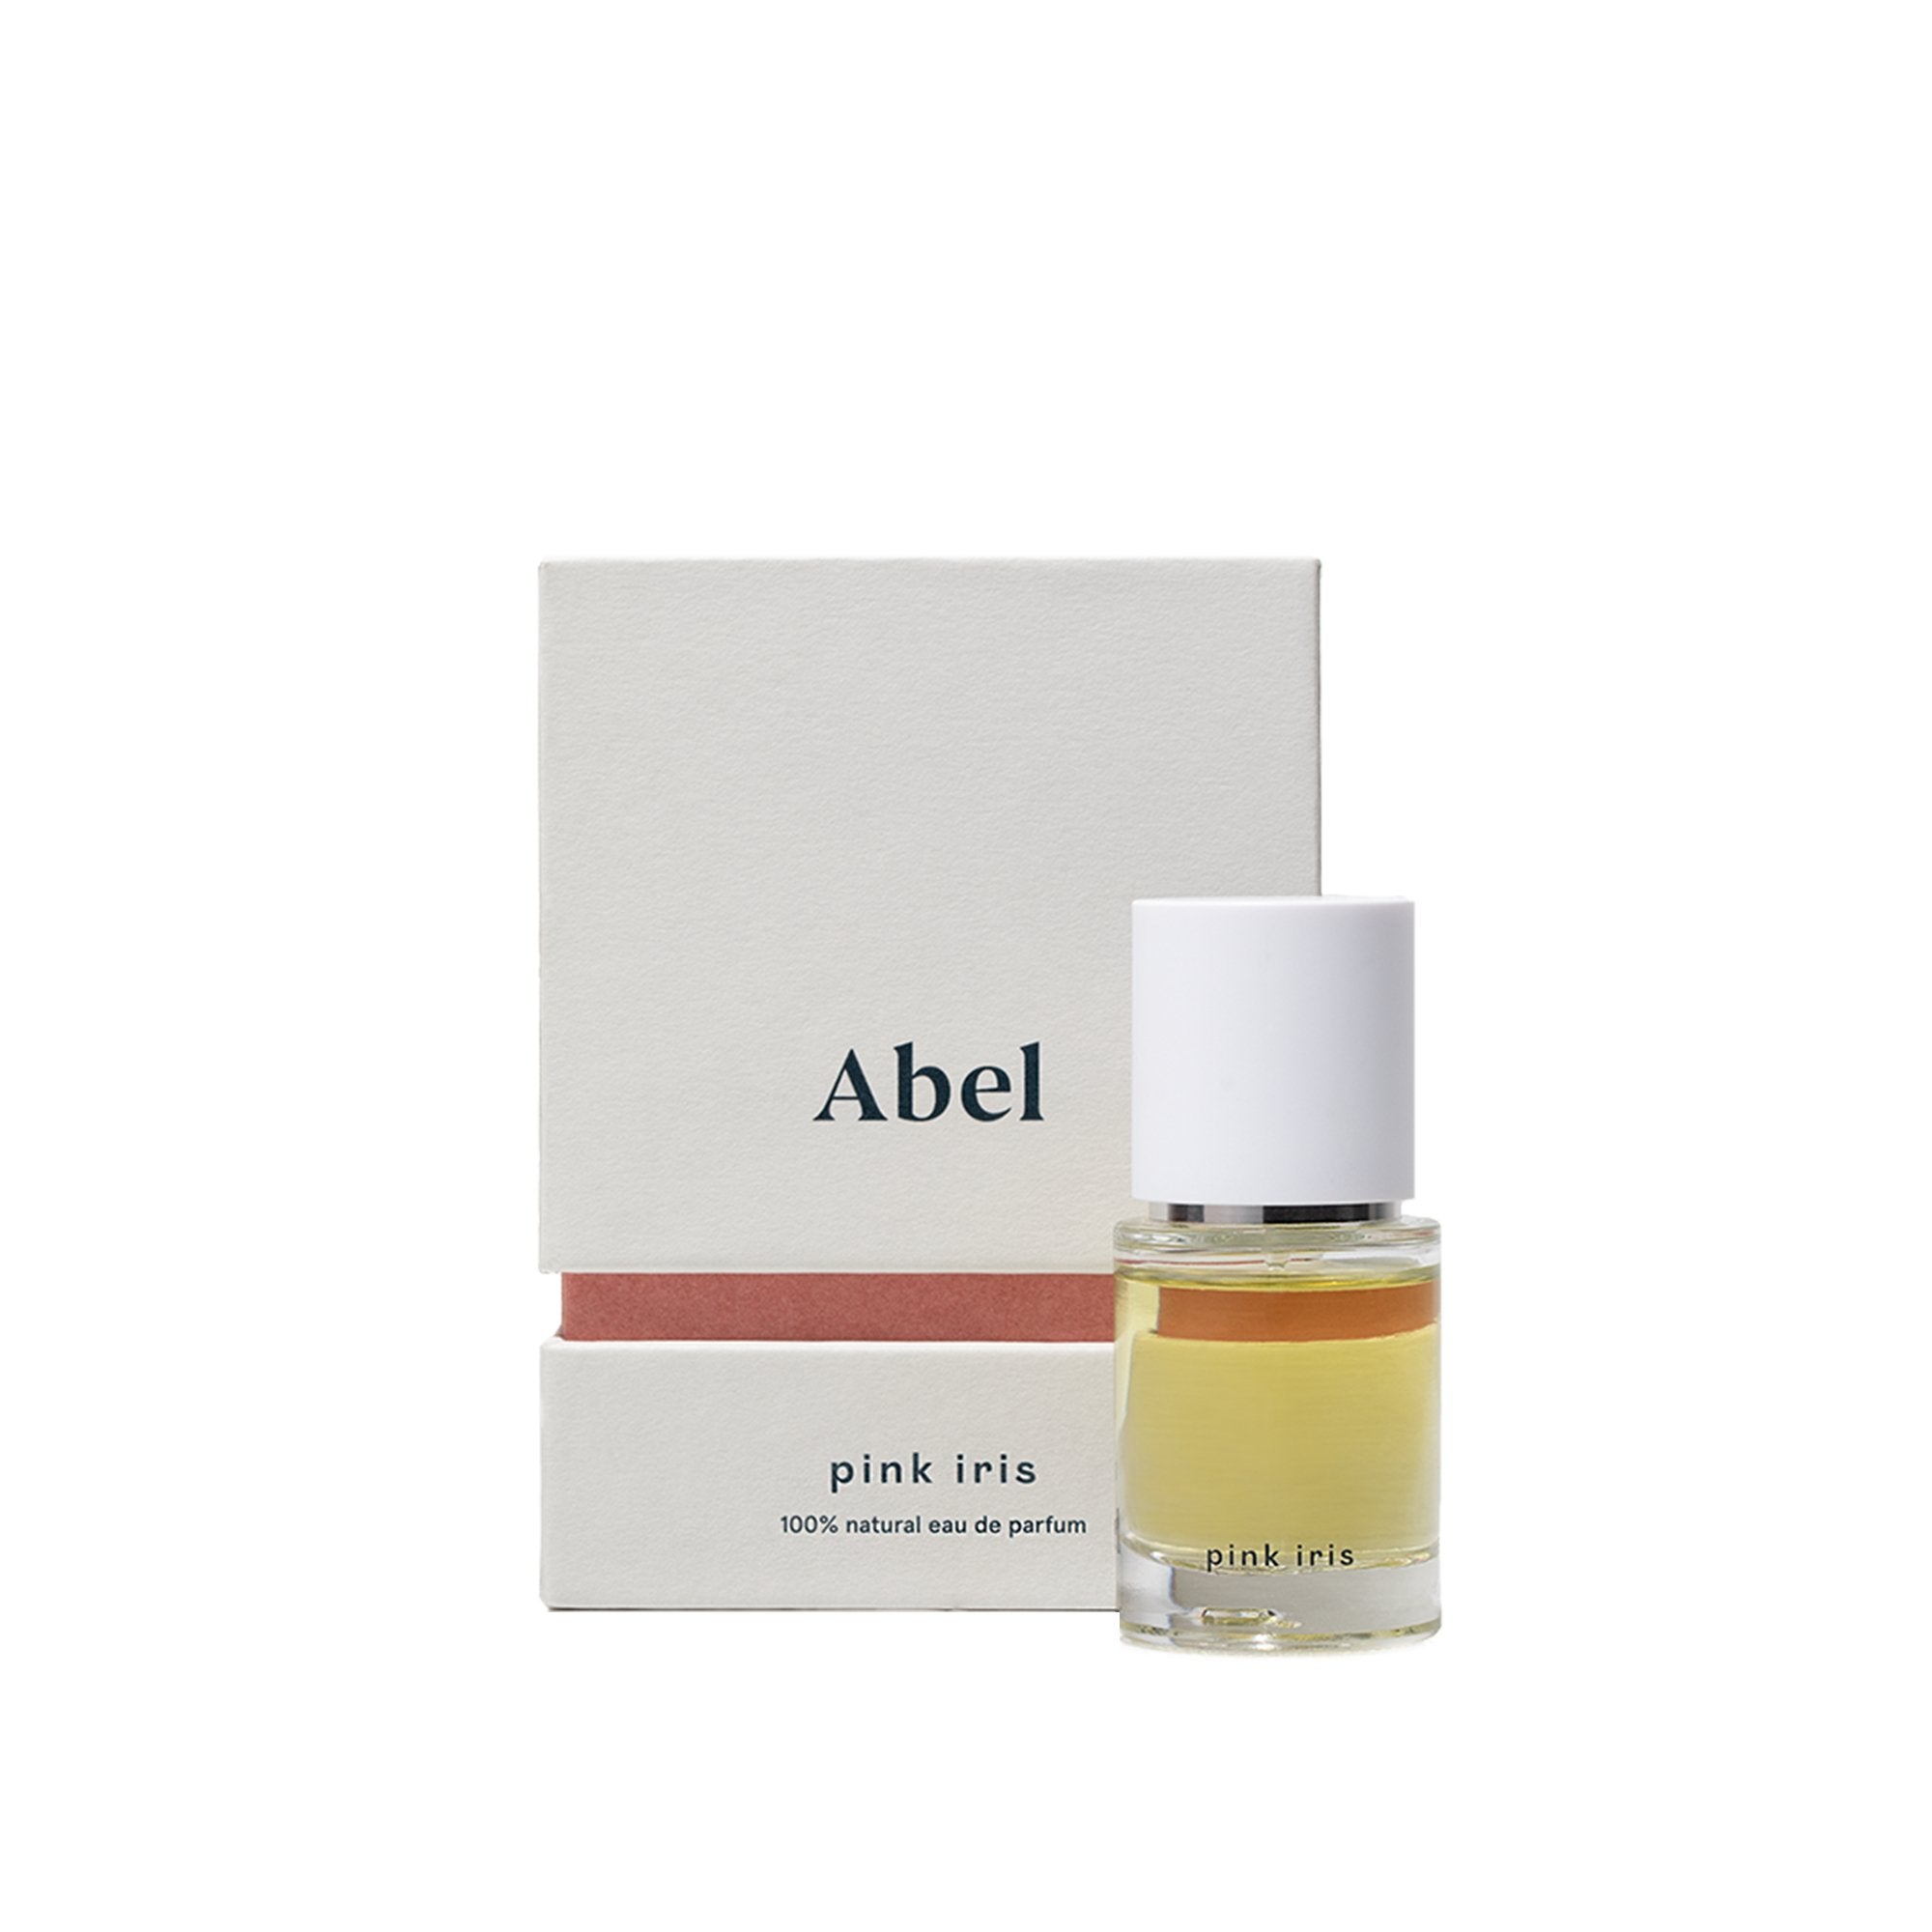 Abel - Pink Iris Eau de Parfum - The Flower Crate